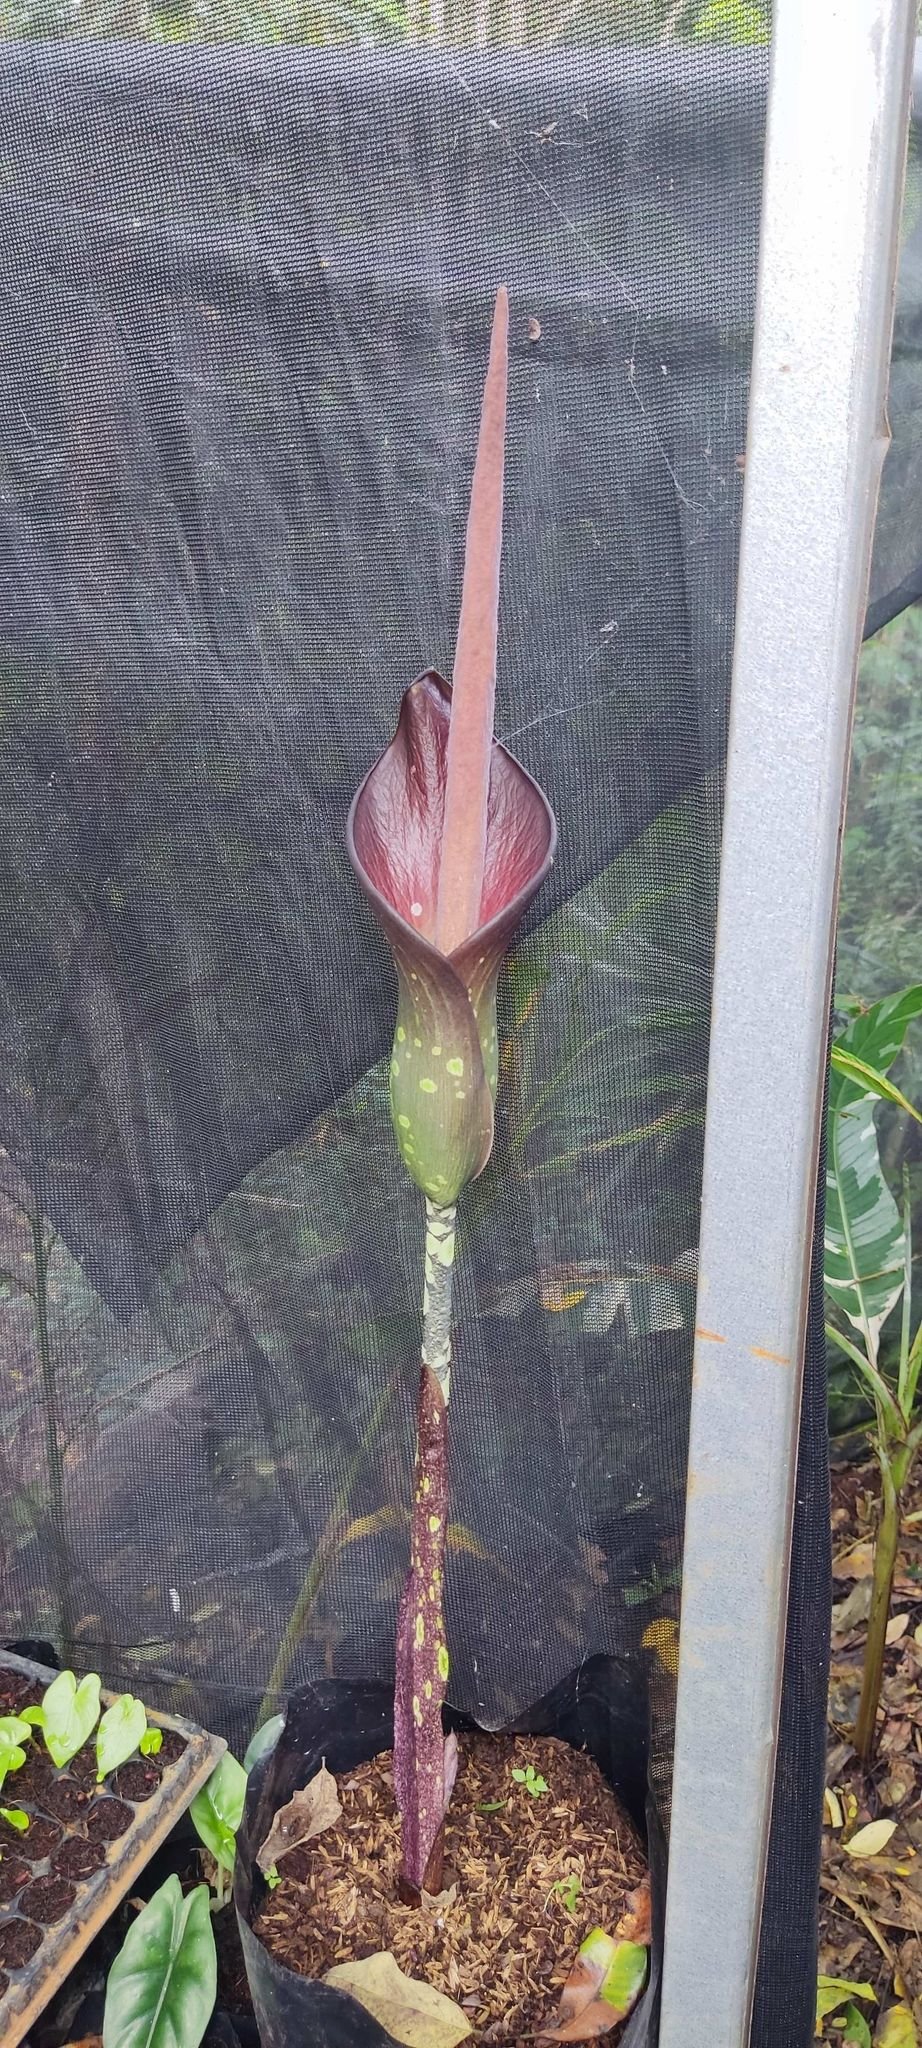 Amorphophallus borneensis "Voodoo Lily"